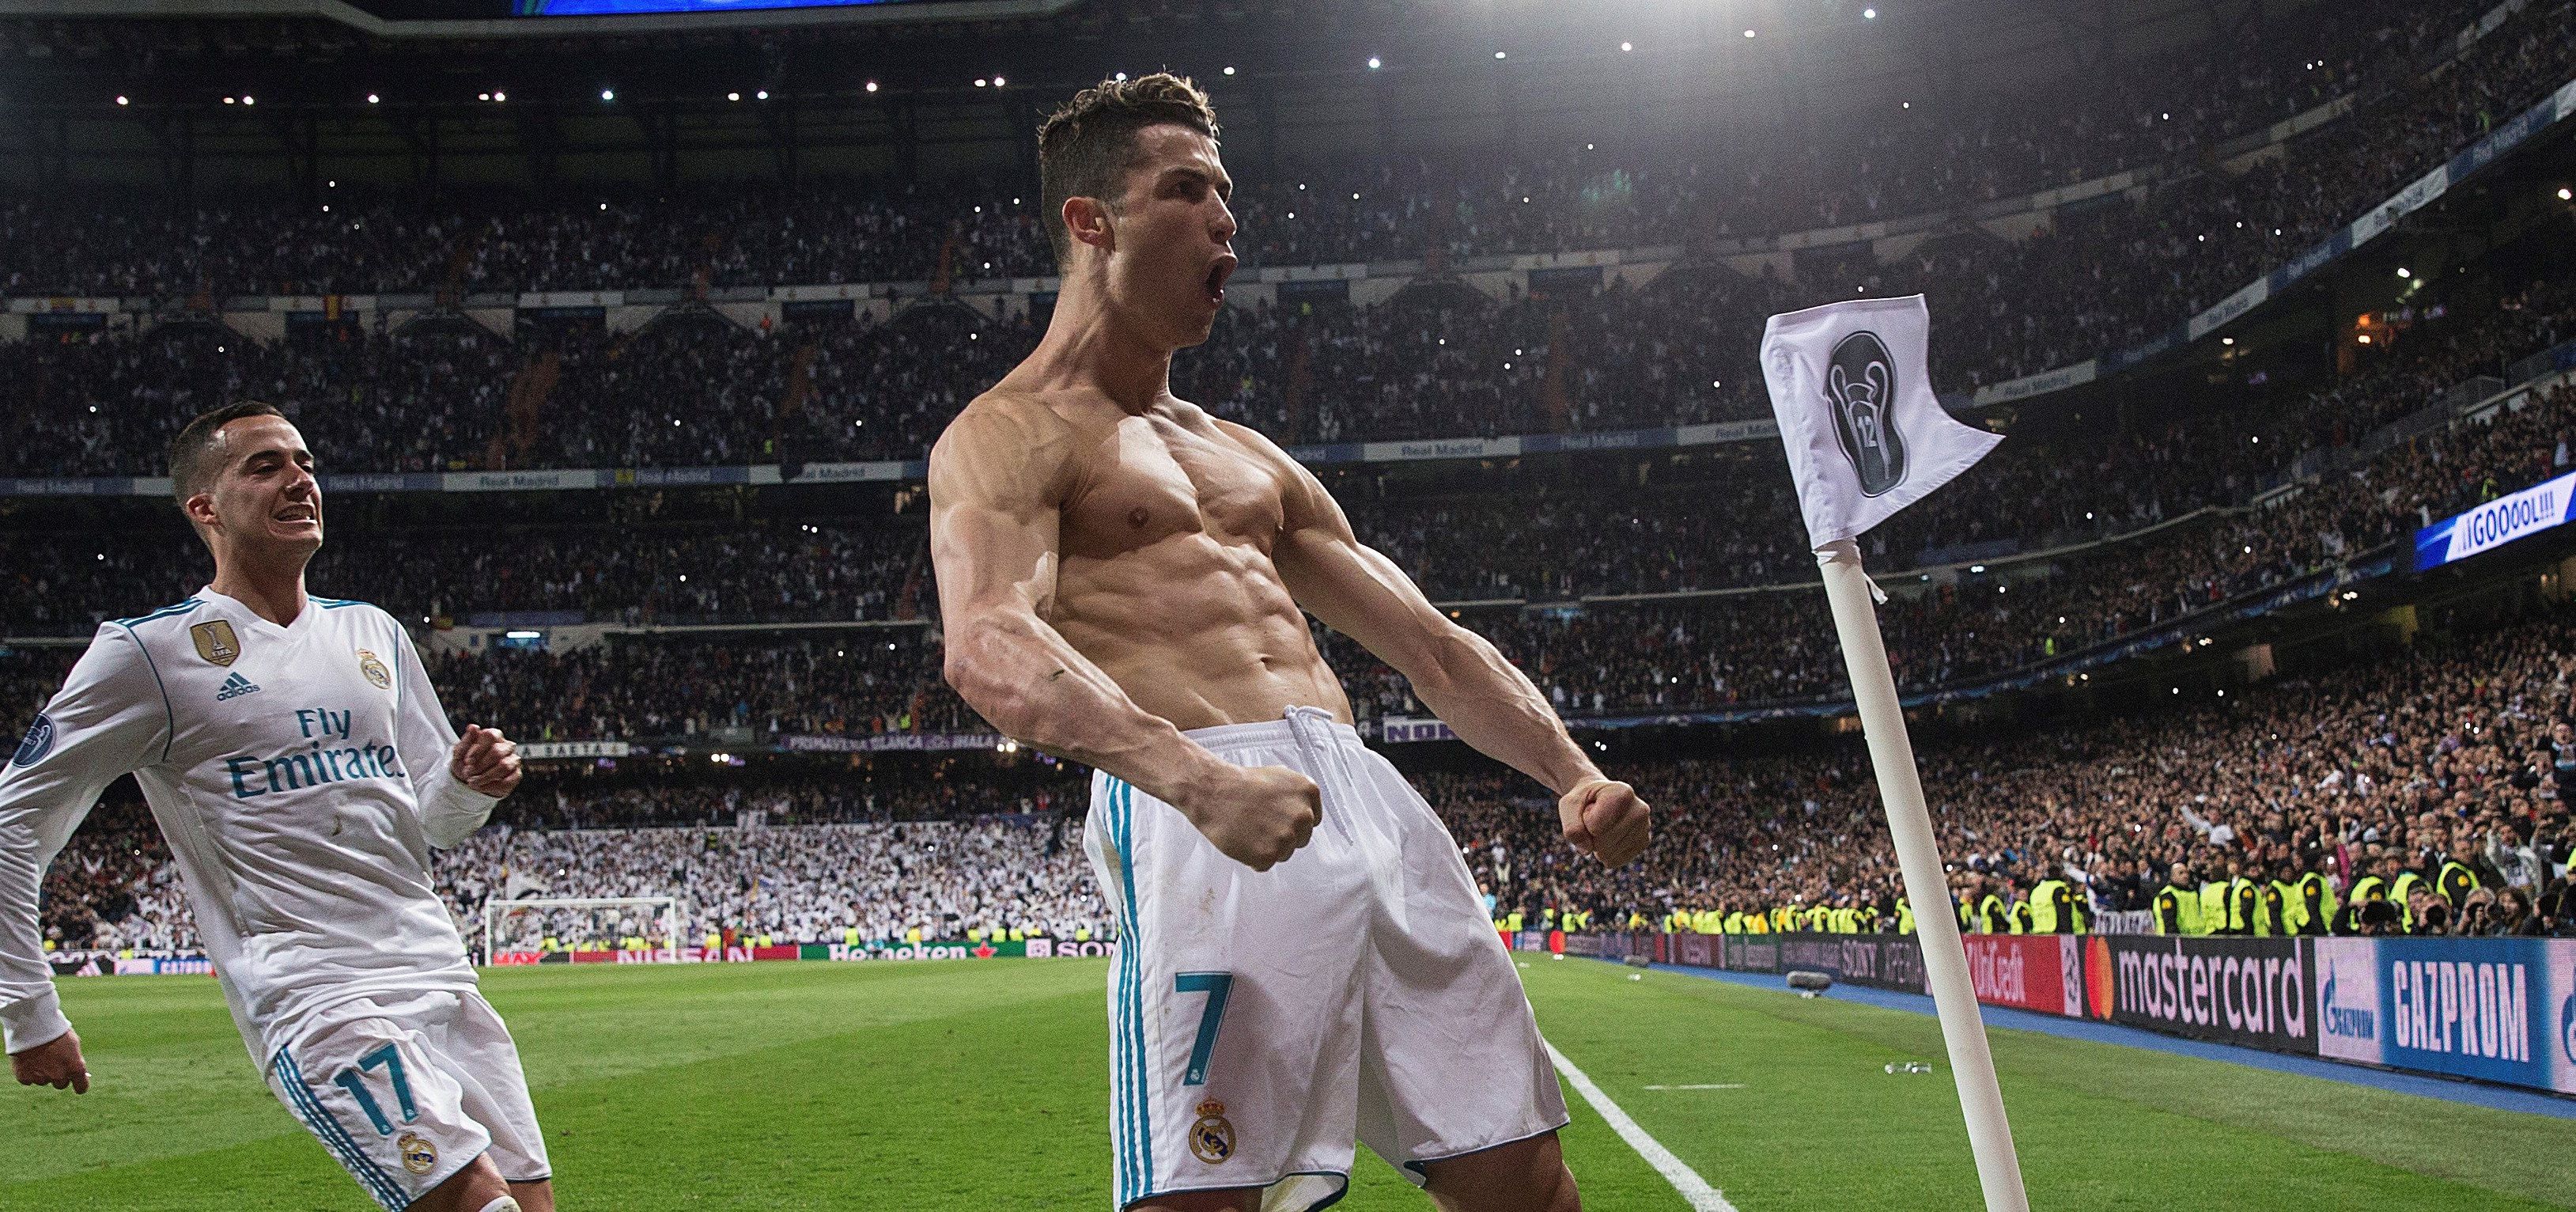 Ronaldo has physical capacity of a 20-year-old